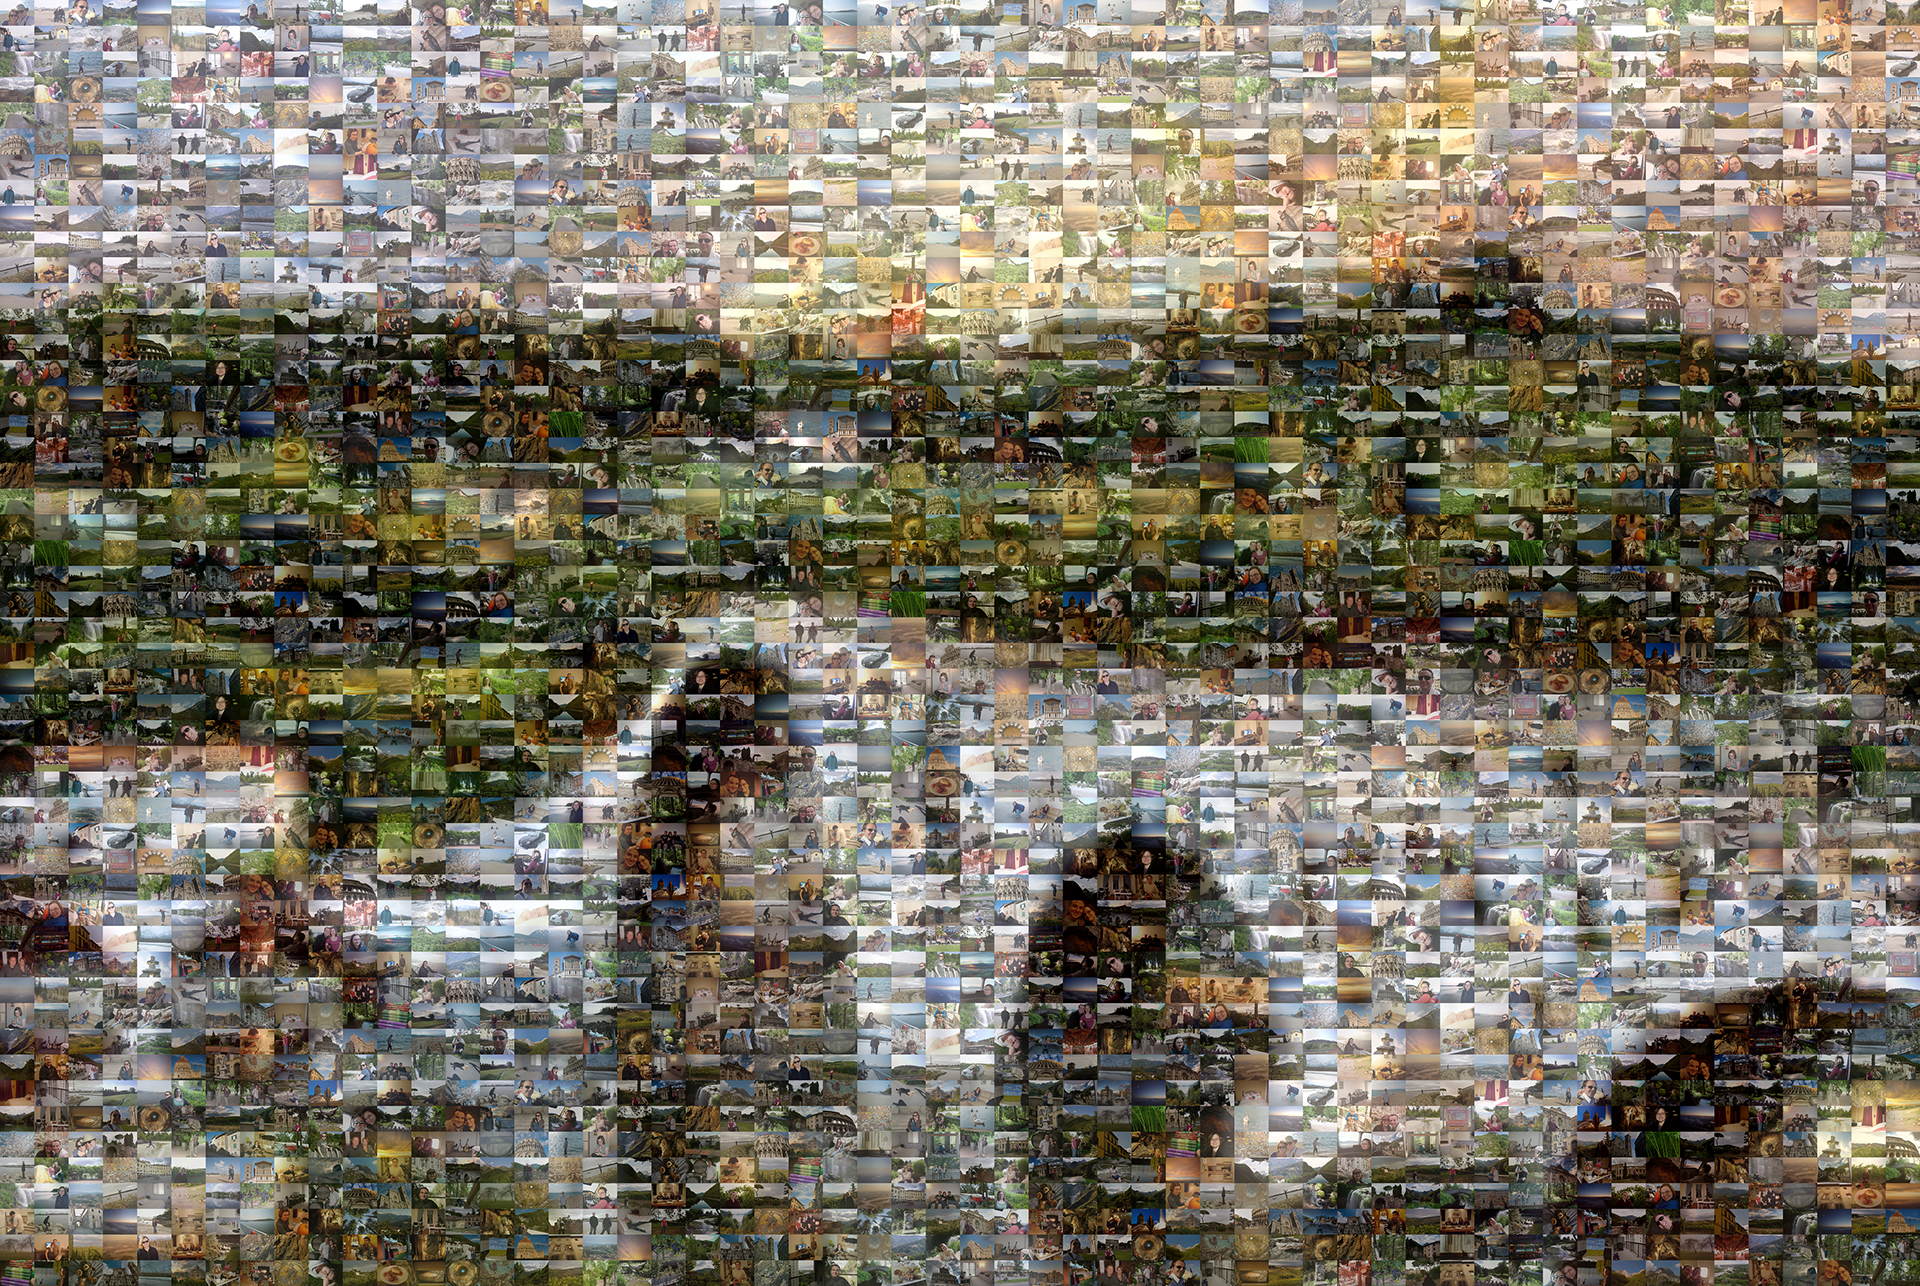 photo mosaic created using 307 travel photos